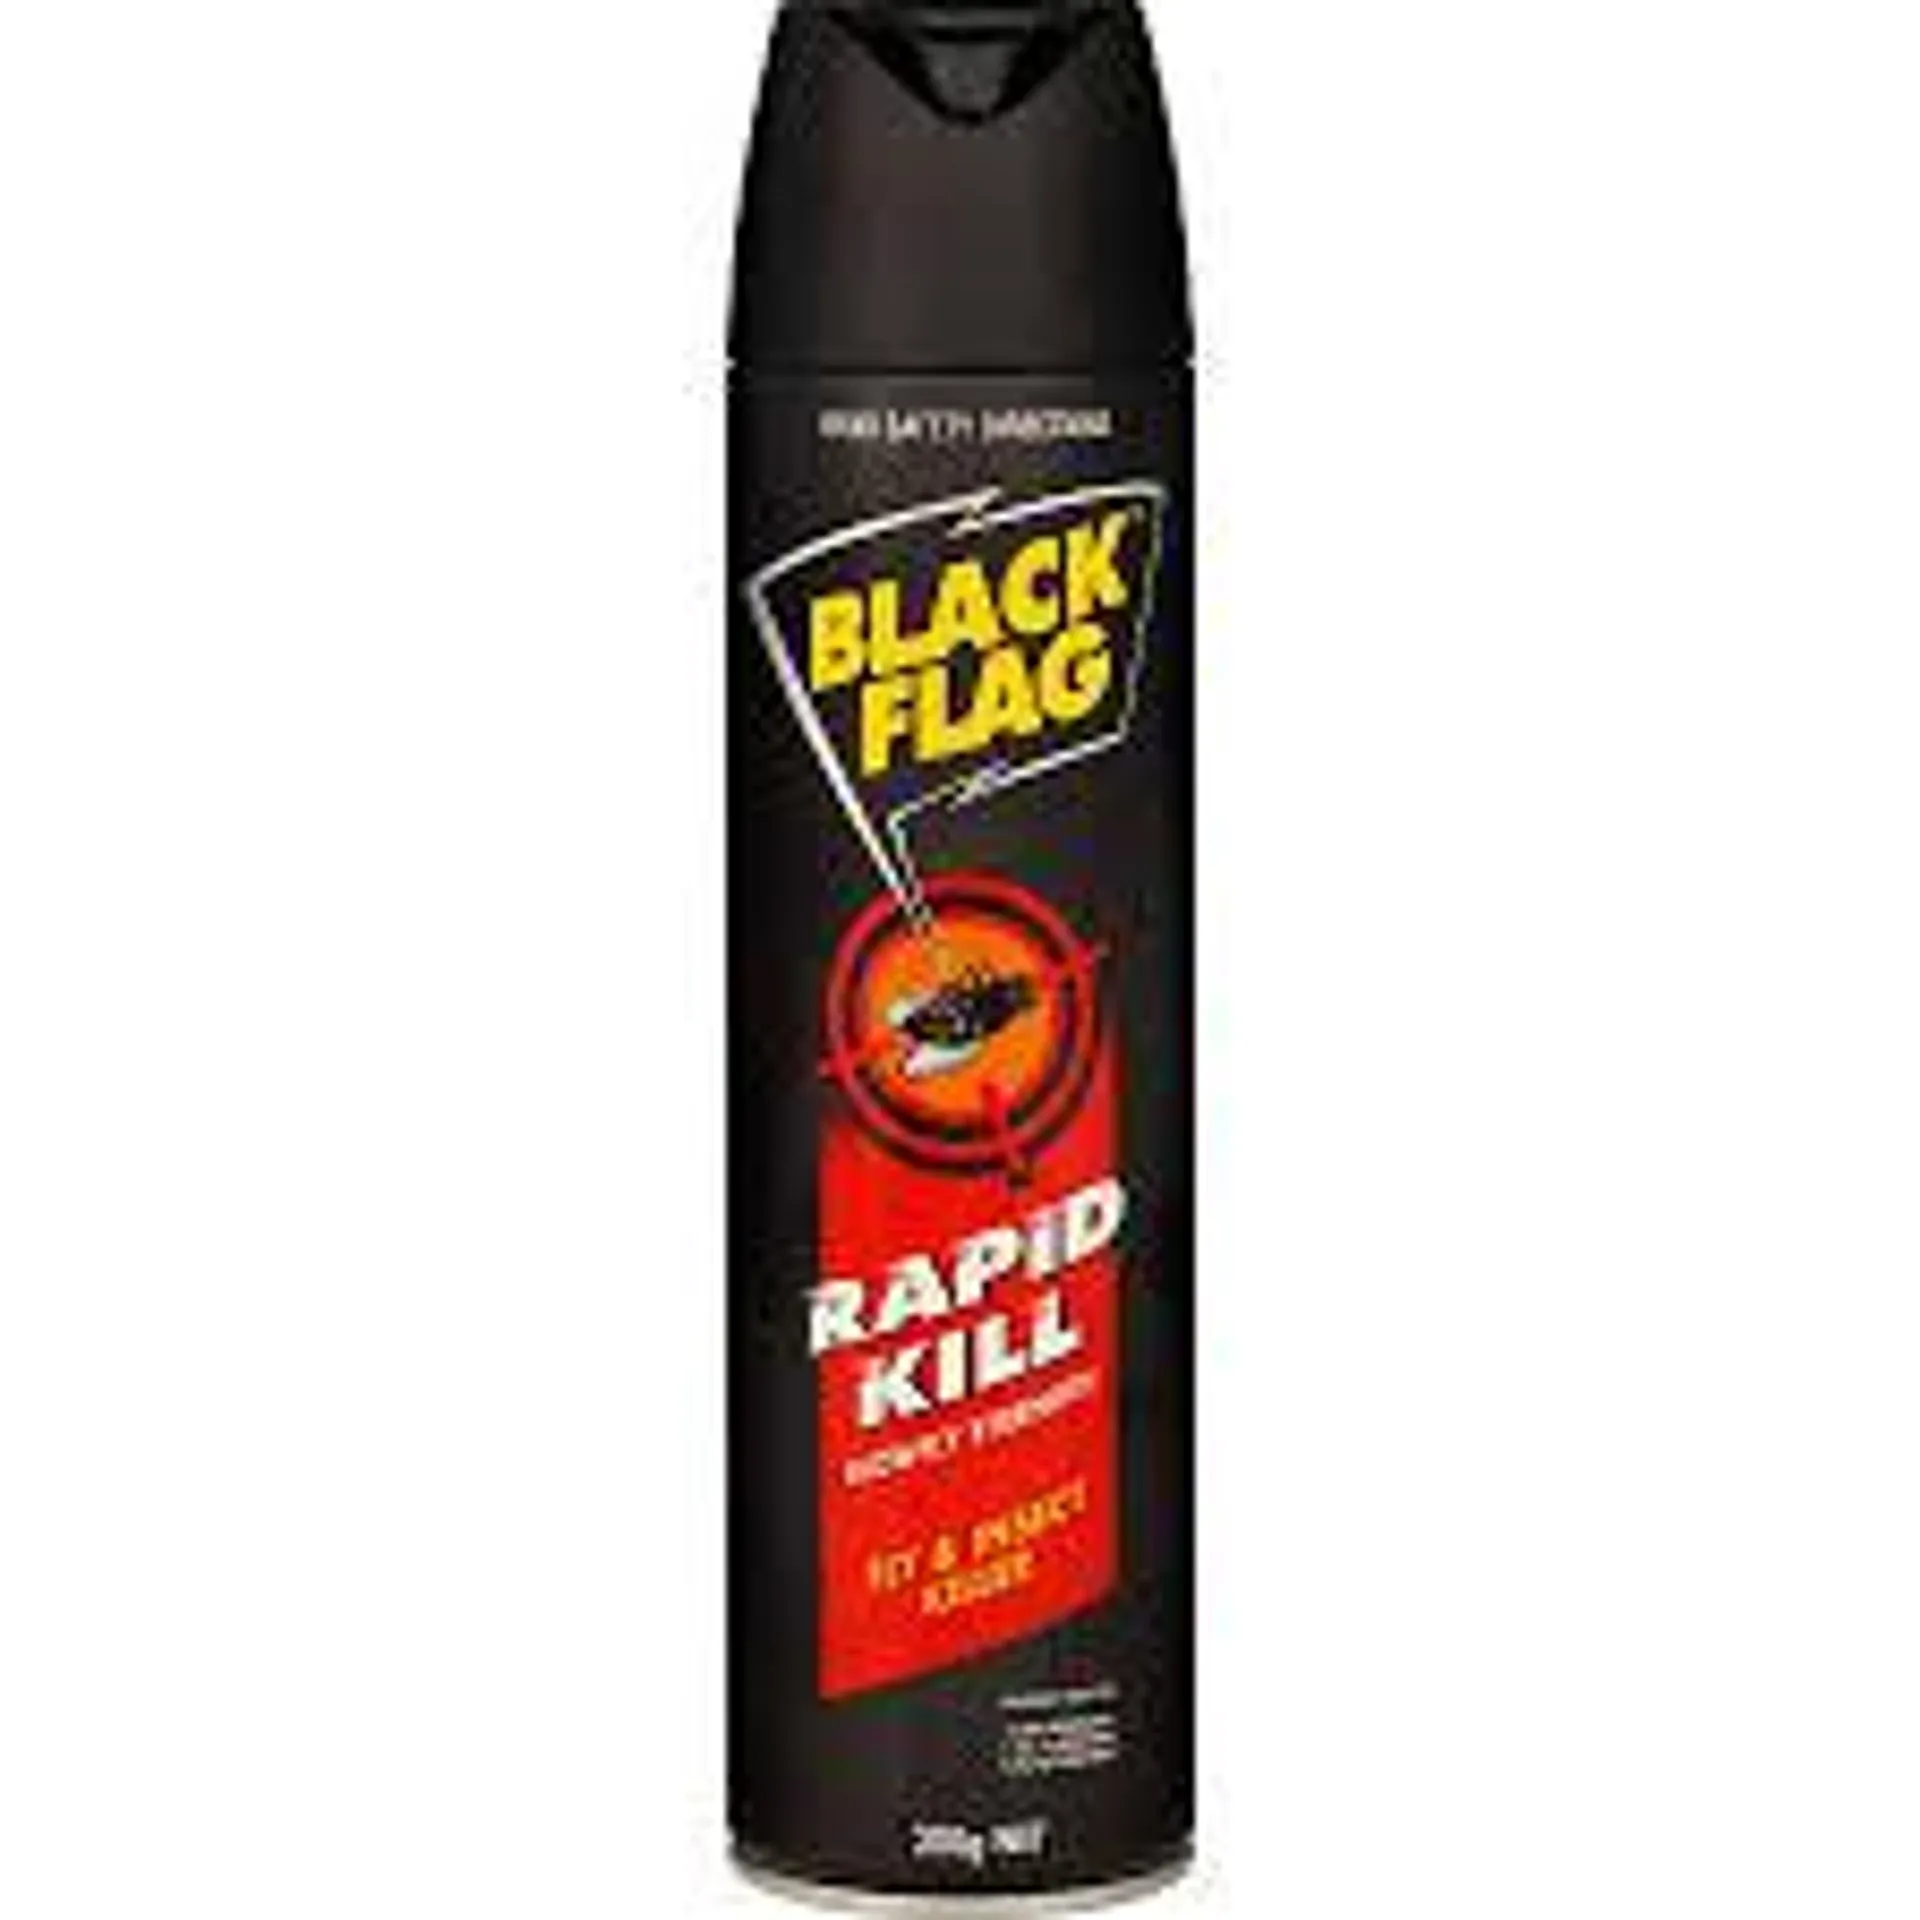 Black Flag Rapid Kill Spray